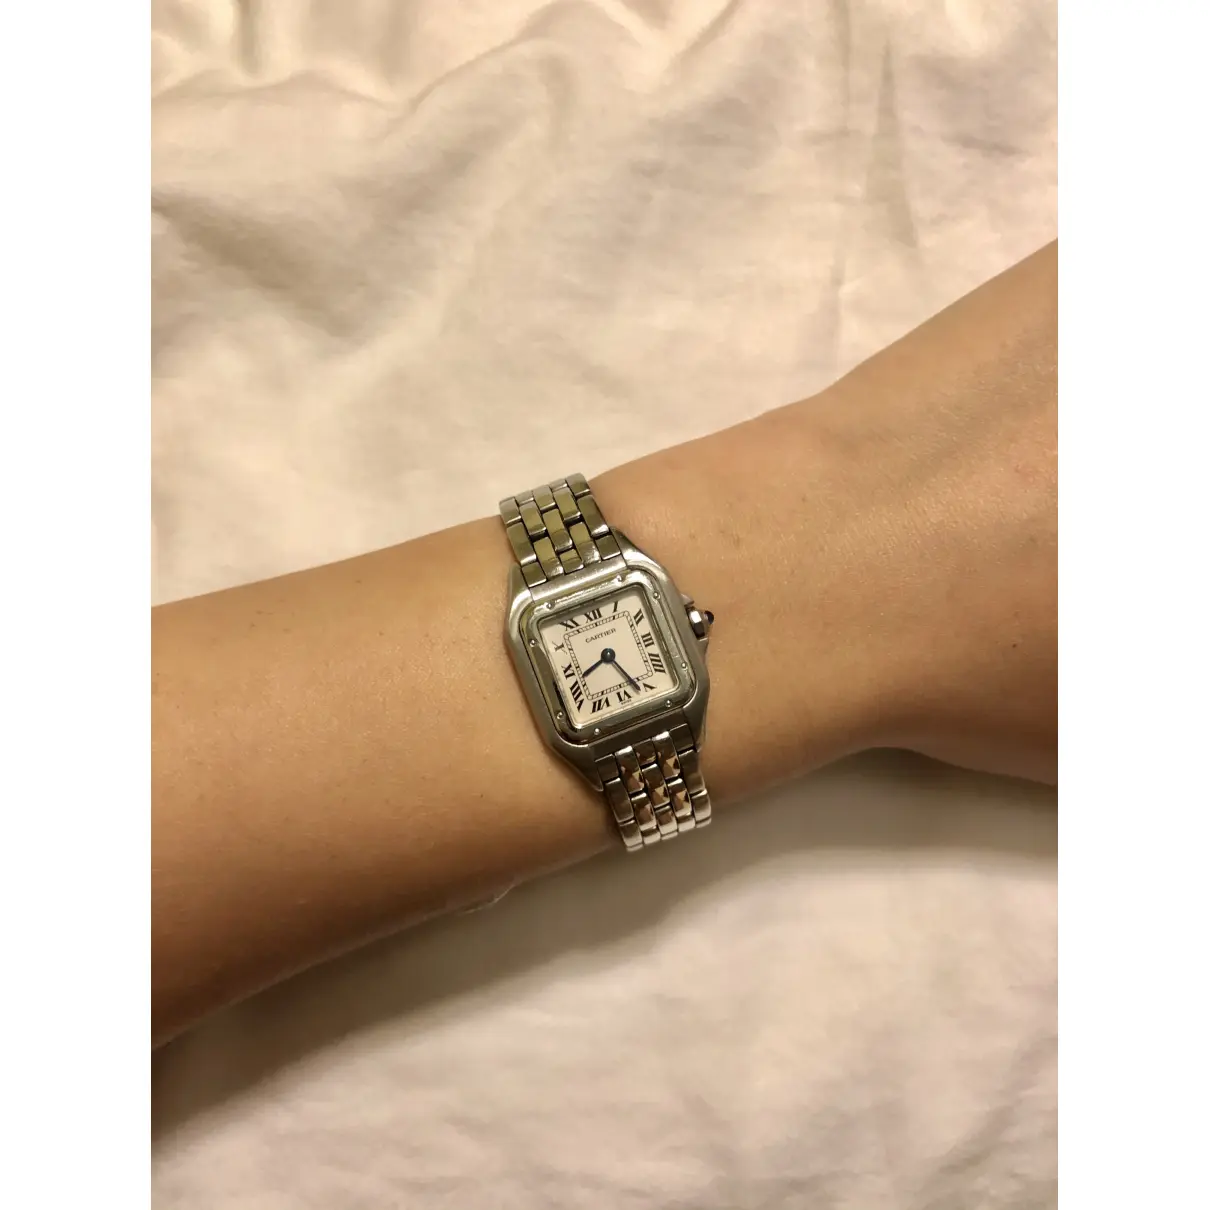 Buy Cartier Panthère watch online